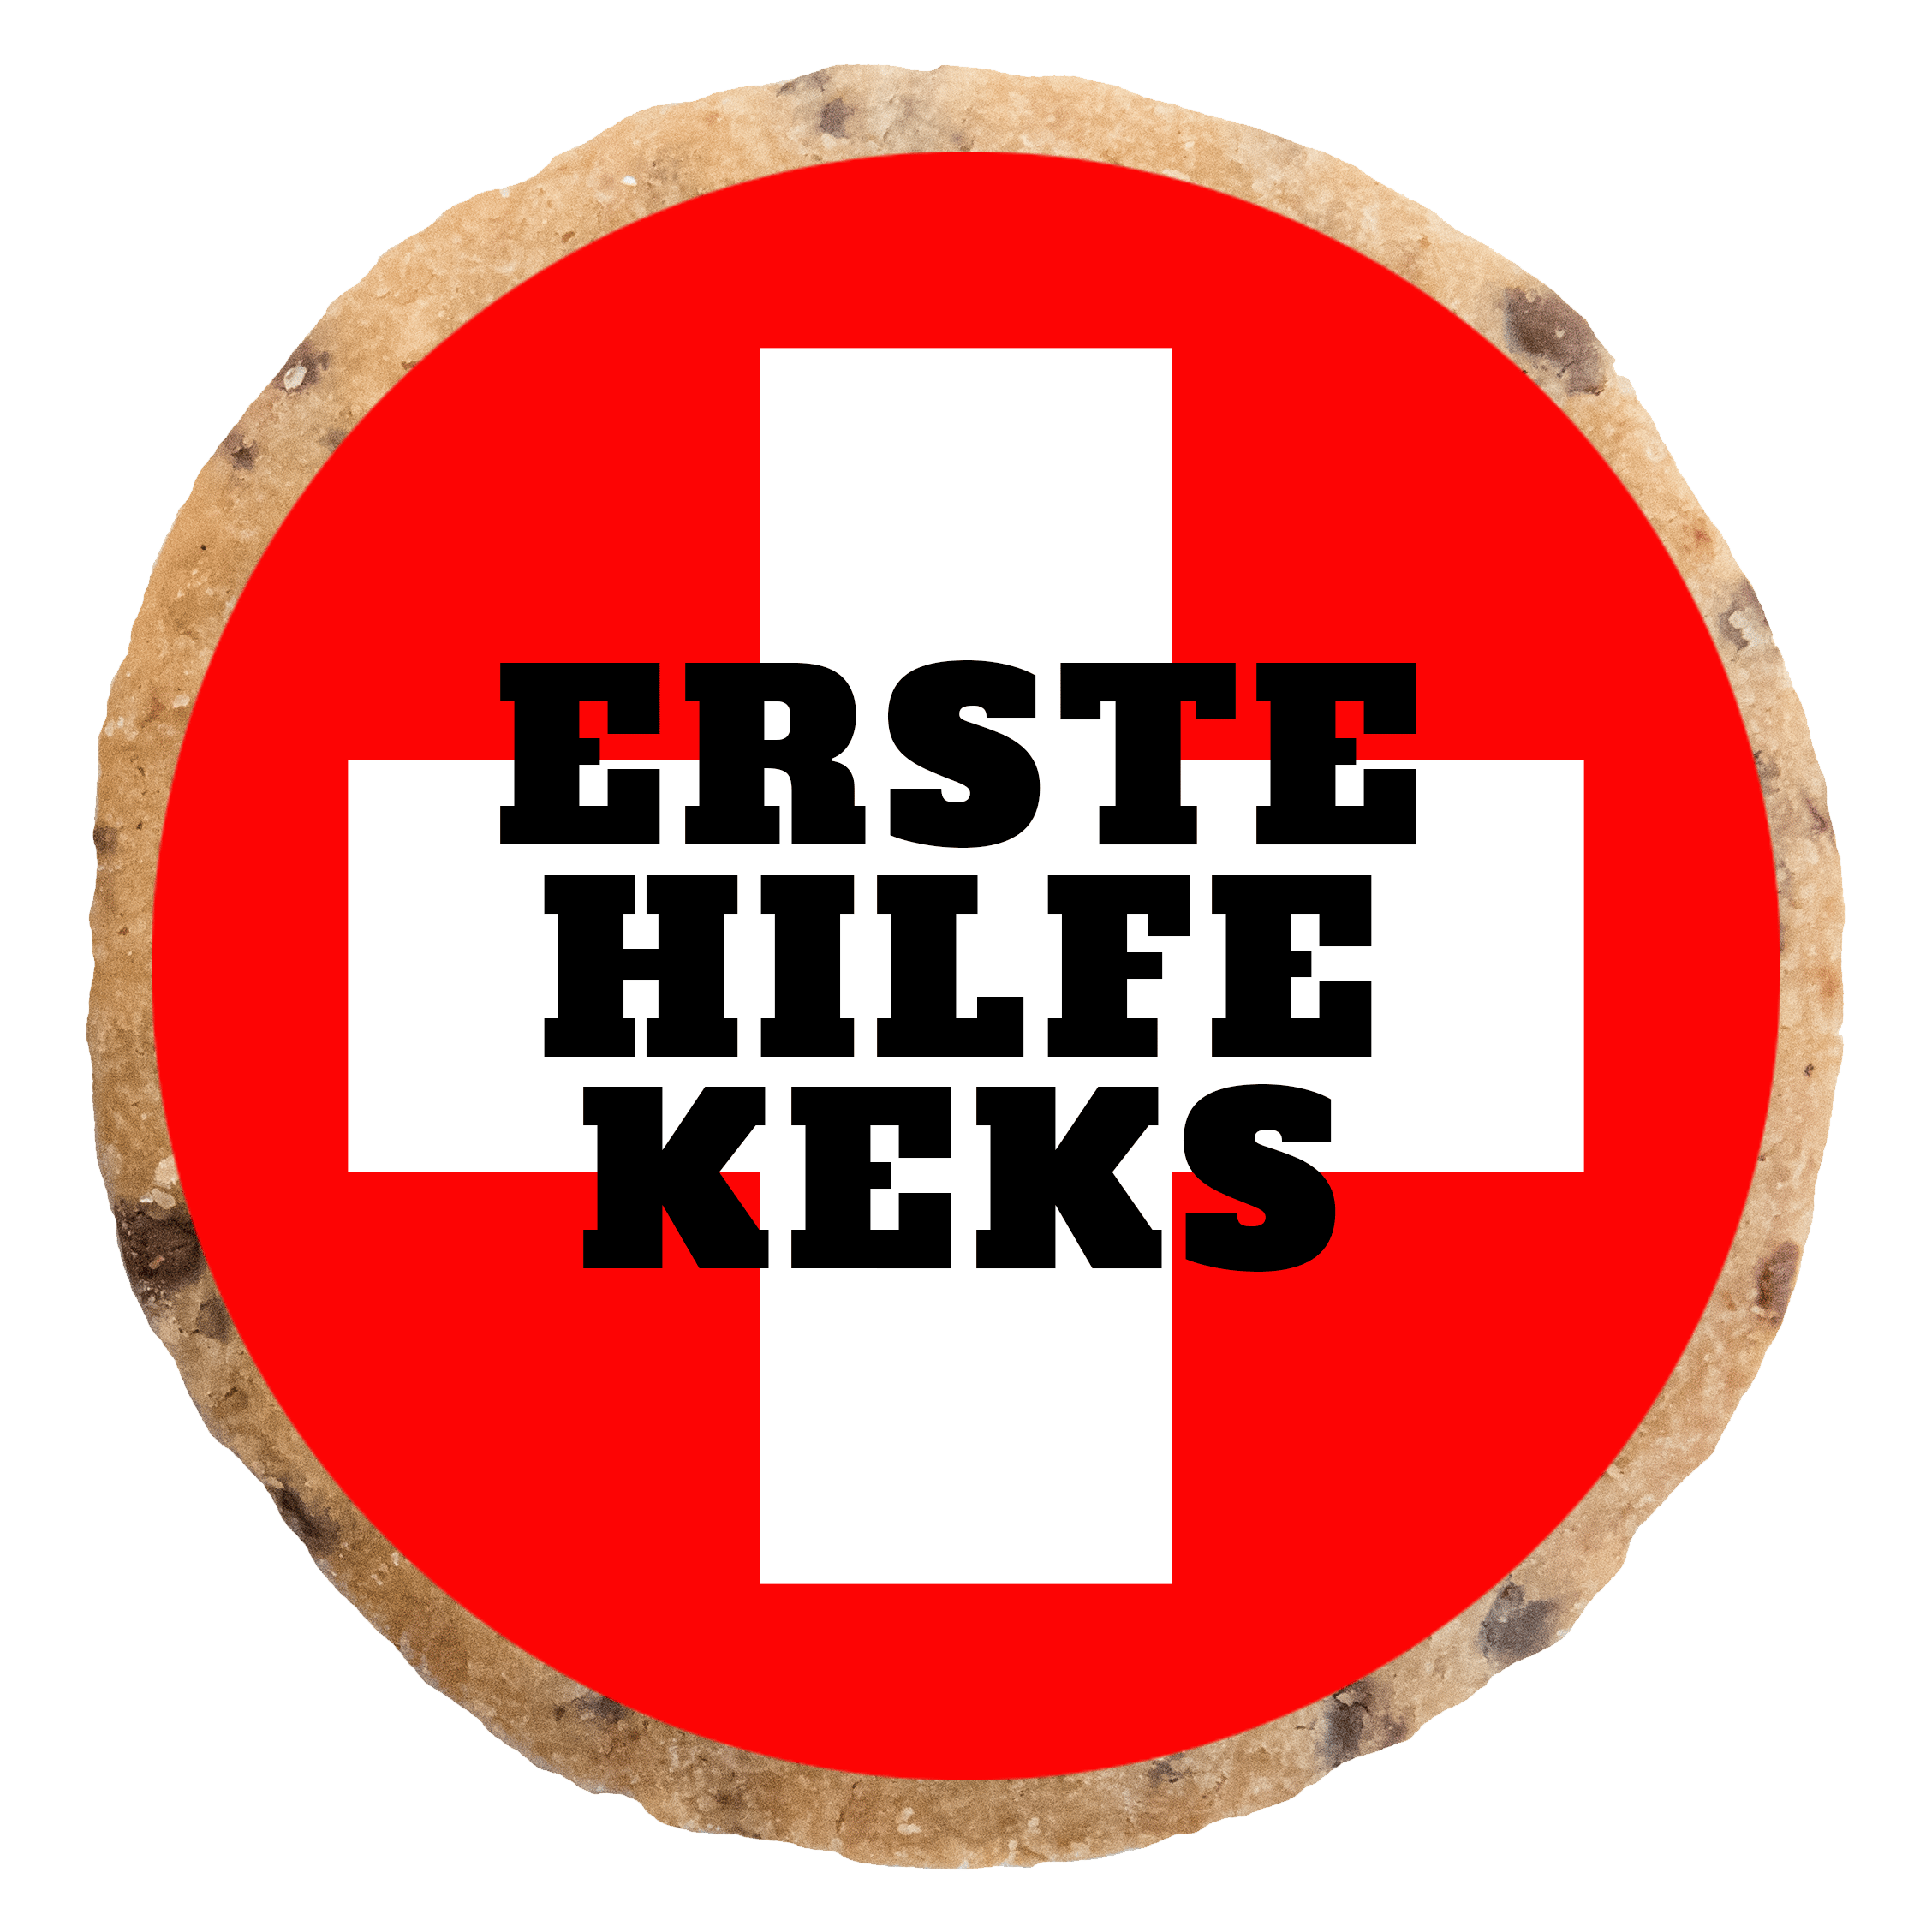 "Erste Hilfe KEKS" MotivKEKS